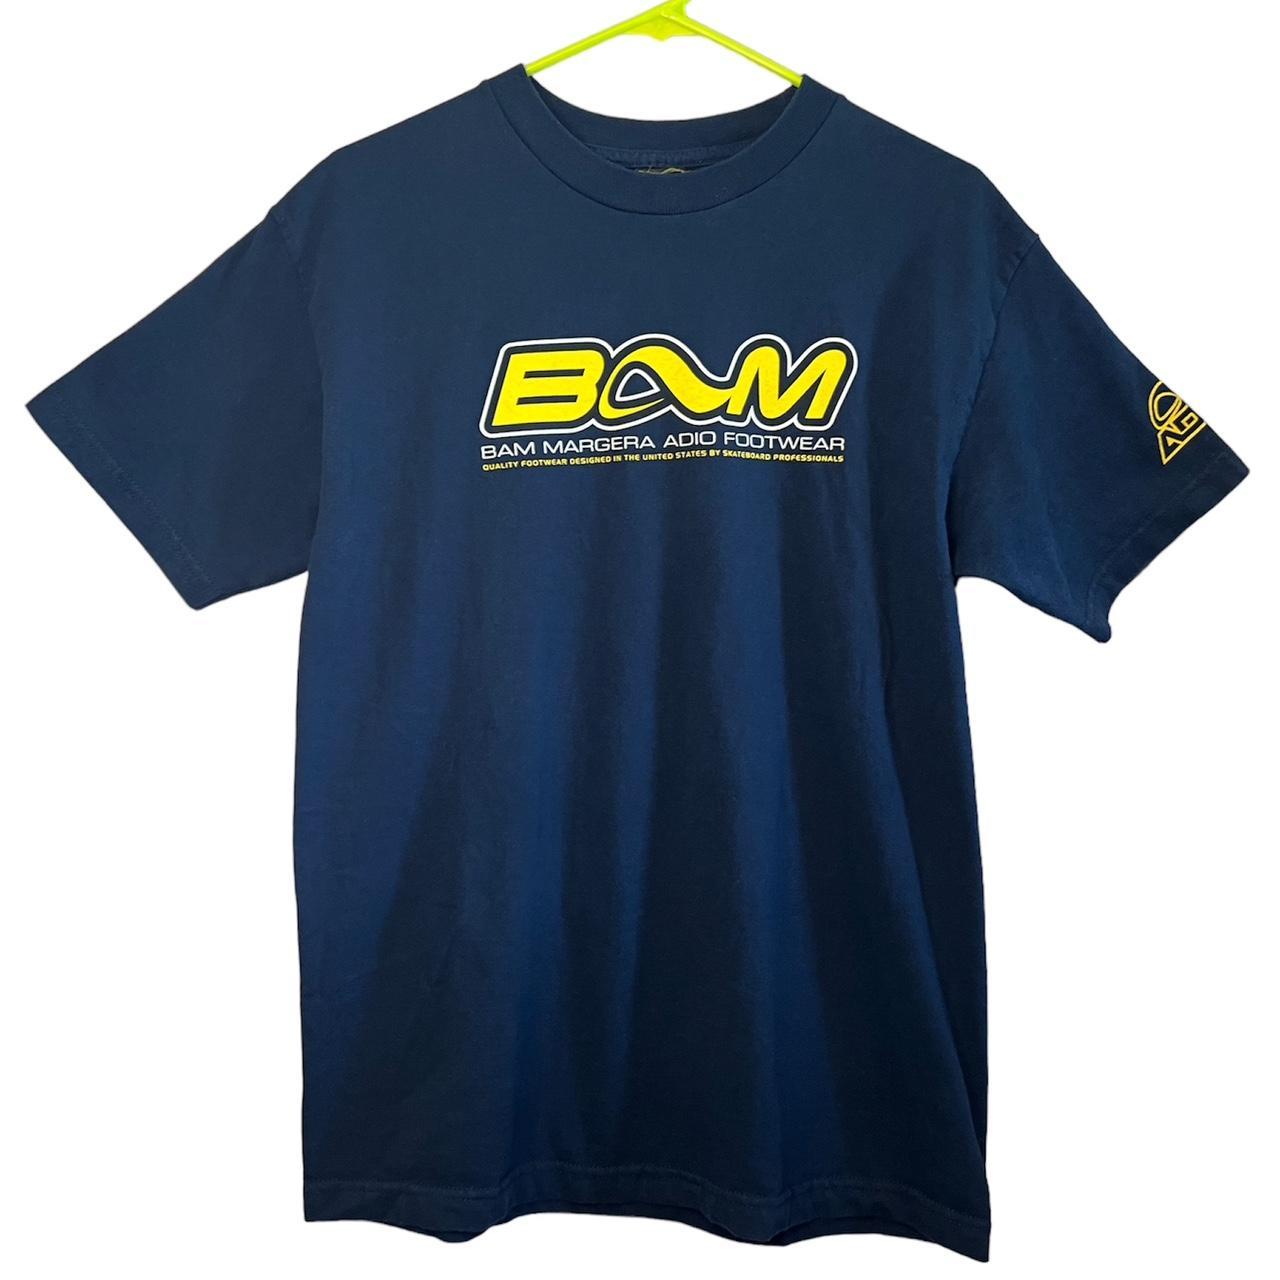 BAM Men's Navy and Yellow T-shirt (2)